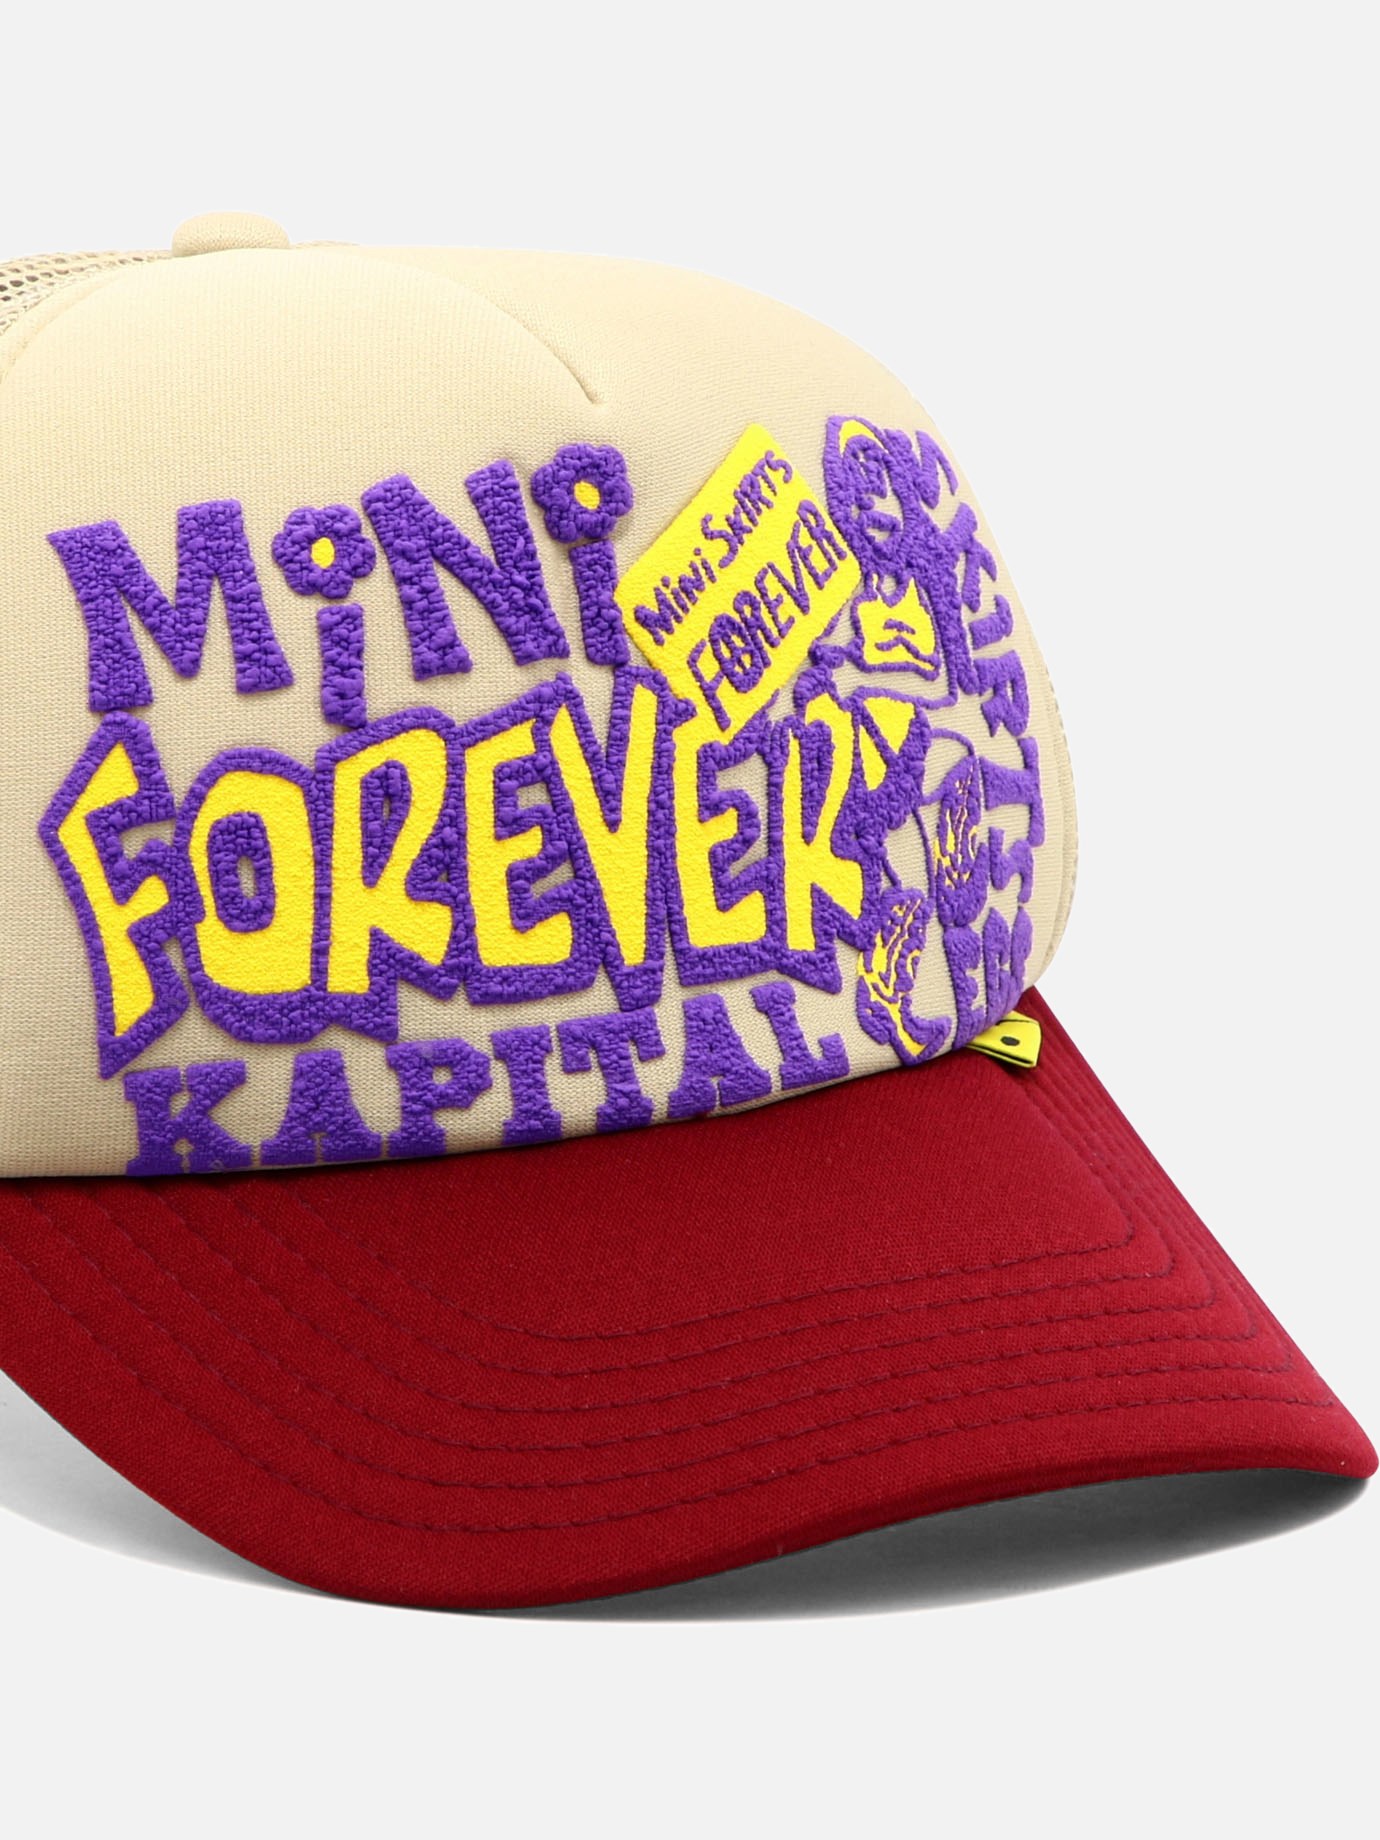 Cappello con visiera  Mini Skirts Forever  by Kapital